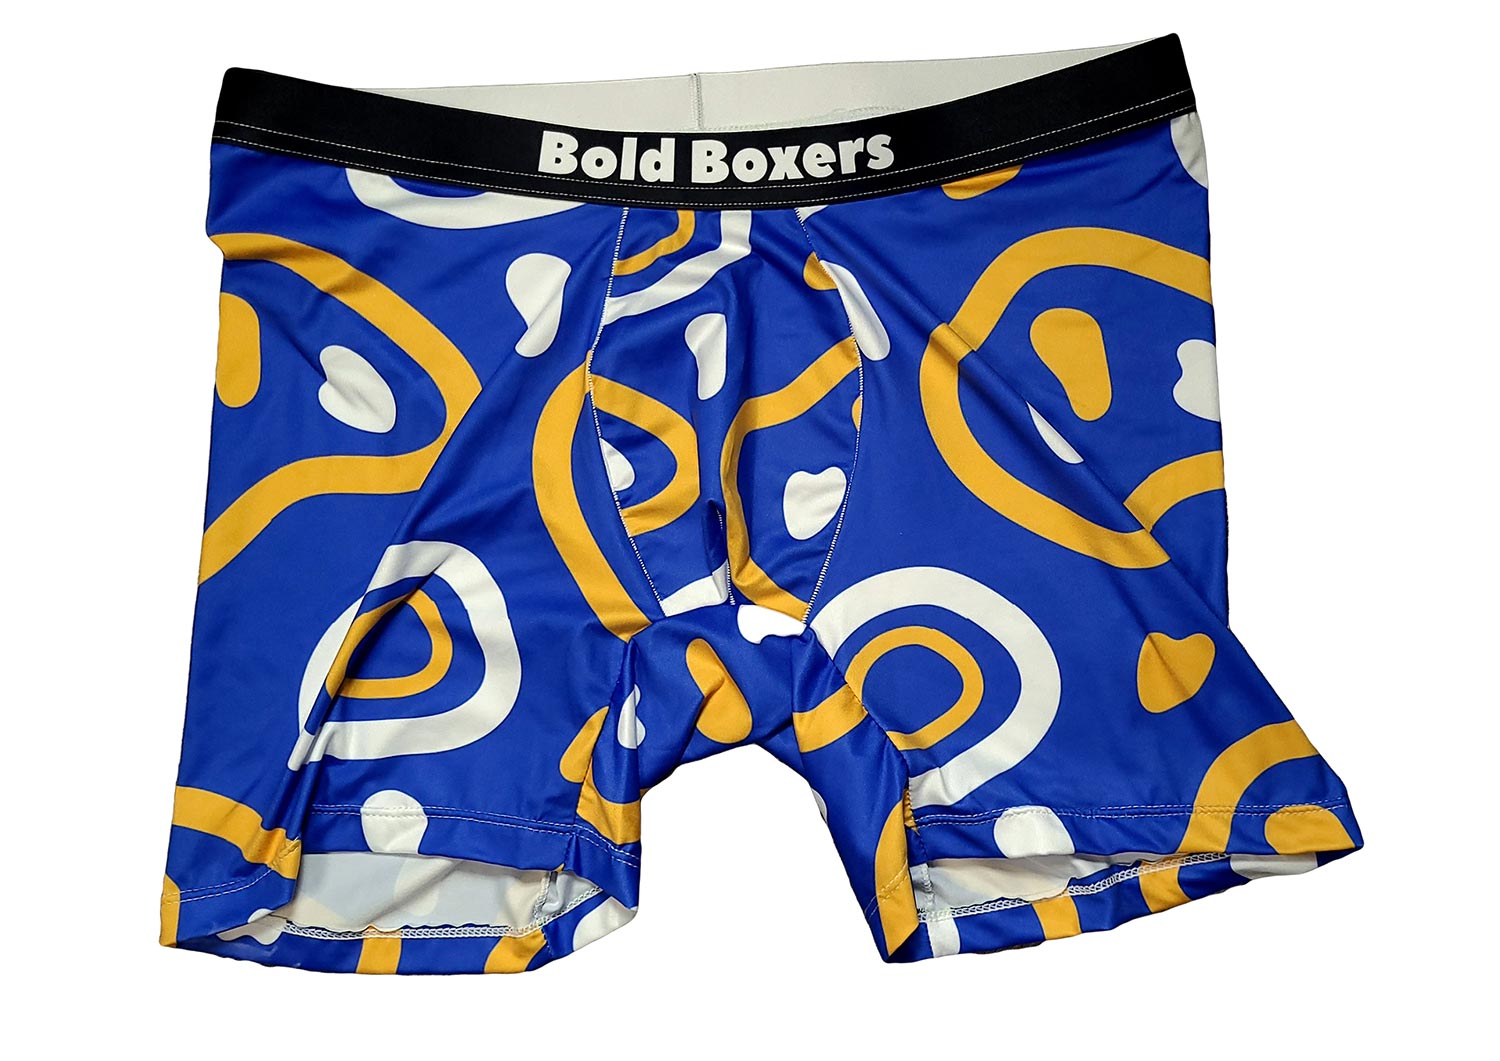 https://youraverageguystyle.com/wp-content/uploads/2022/09/Bold-Boxers-2.jpg